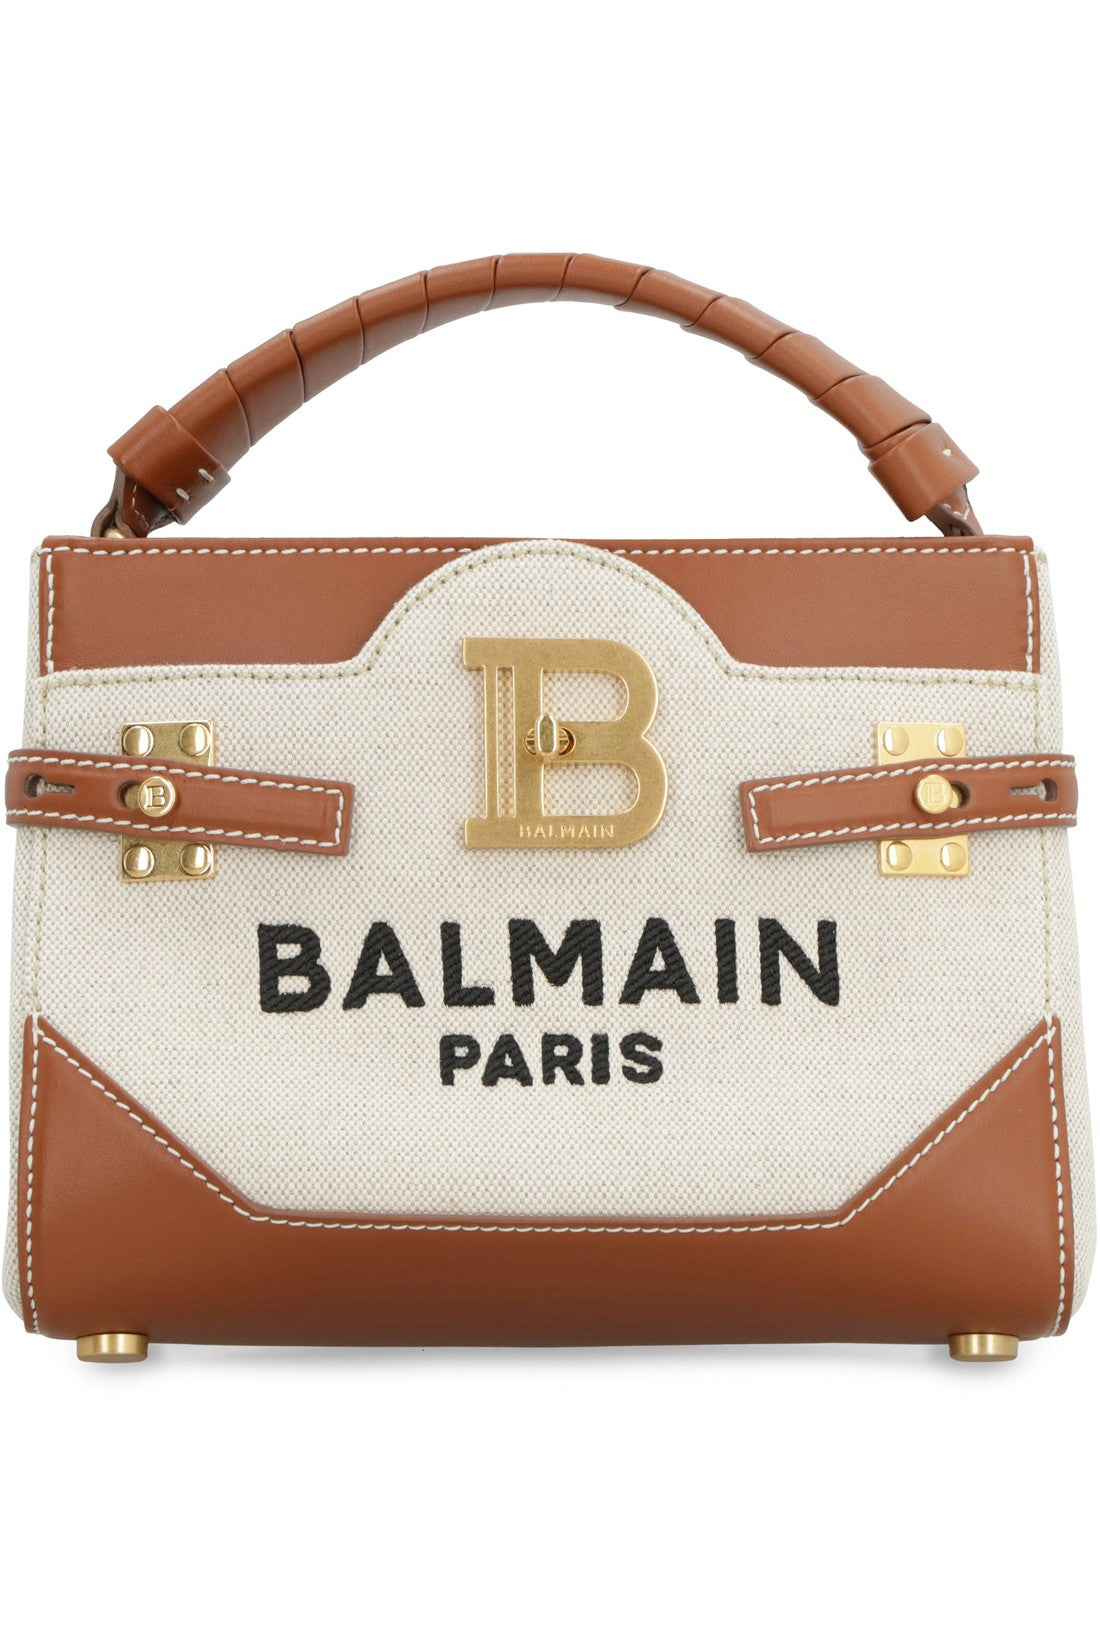 Balmain-OUTLET-SALE-B-Buzz handbag-ARCHIVIST